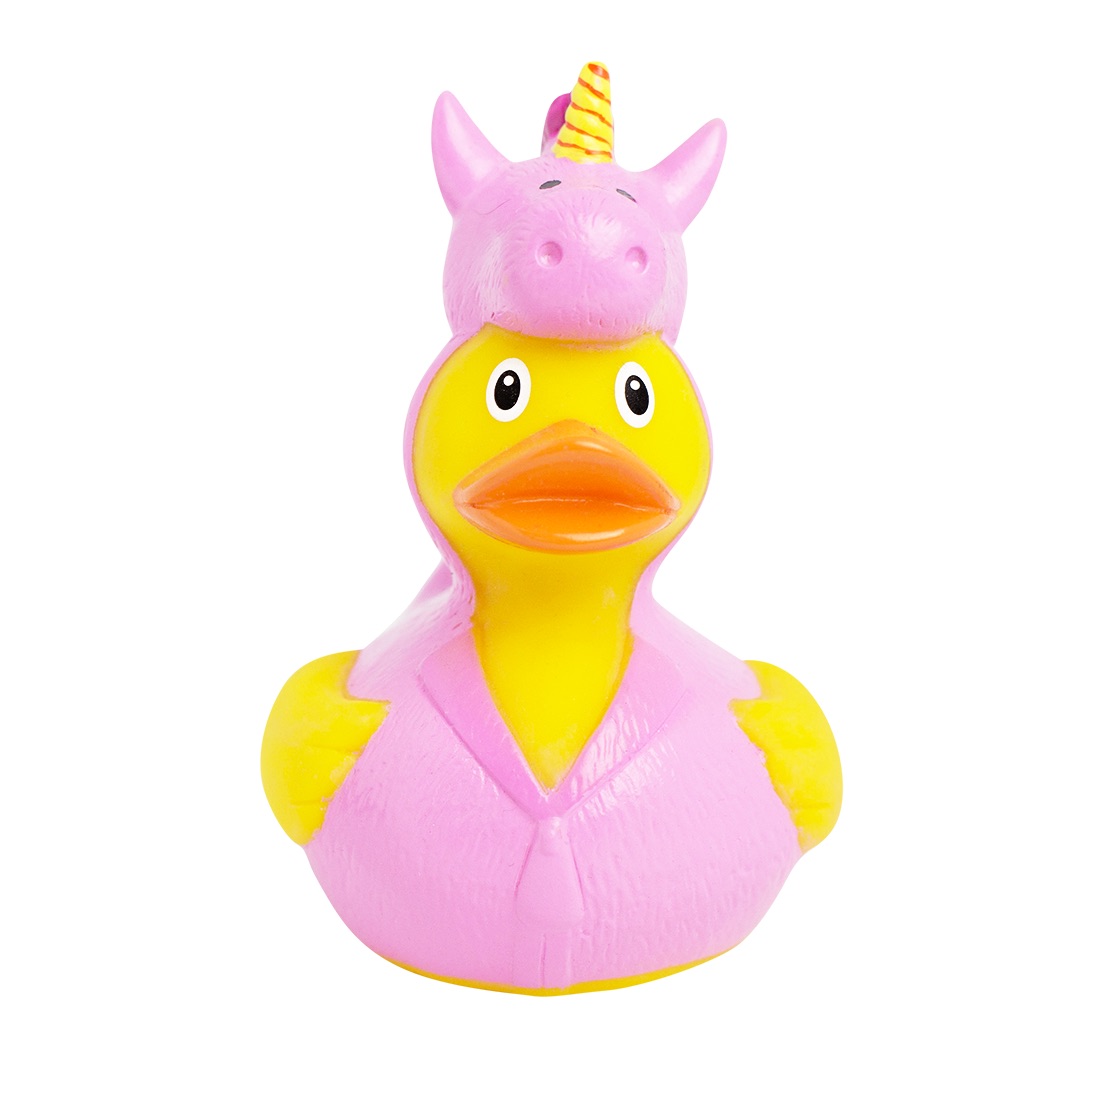 Unicorn Costume Rubber Duck | Buy premium rubber ducks online - world ...